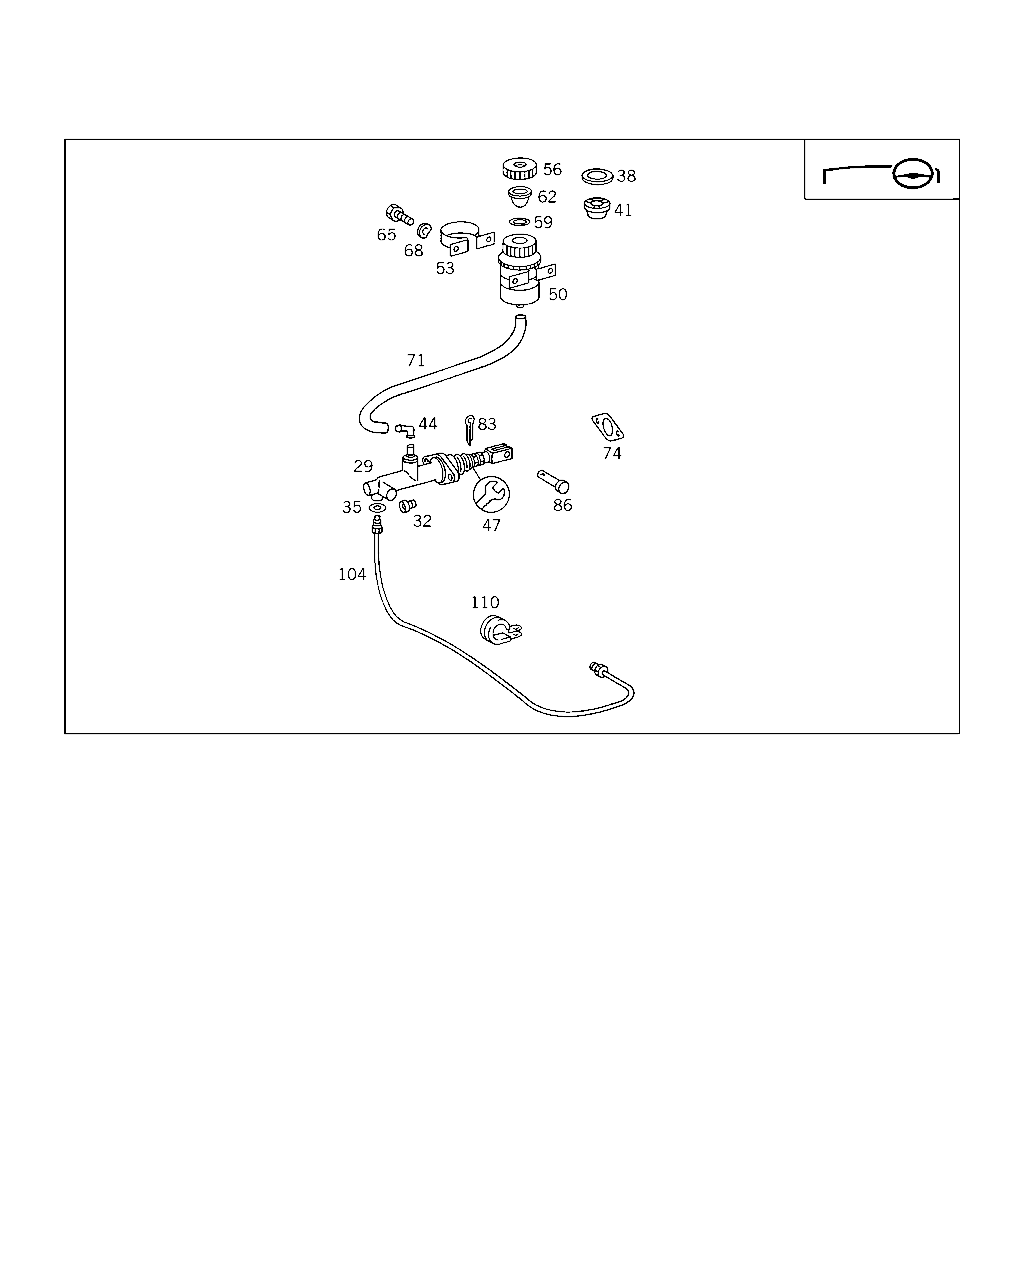 INSTALLATION HYDRAULIQUE DU PEDALIER [Véhicules tout-terrain] MERCEDES [EUROPA] [CYCLE]300 GD